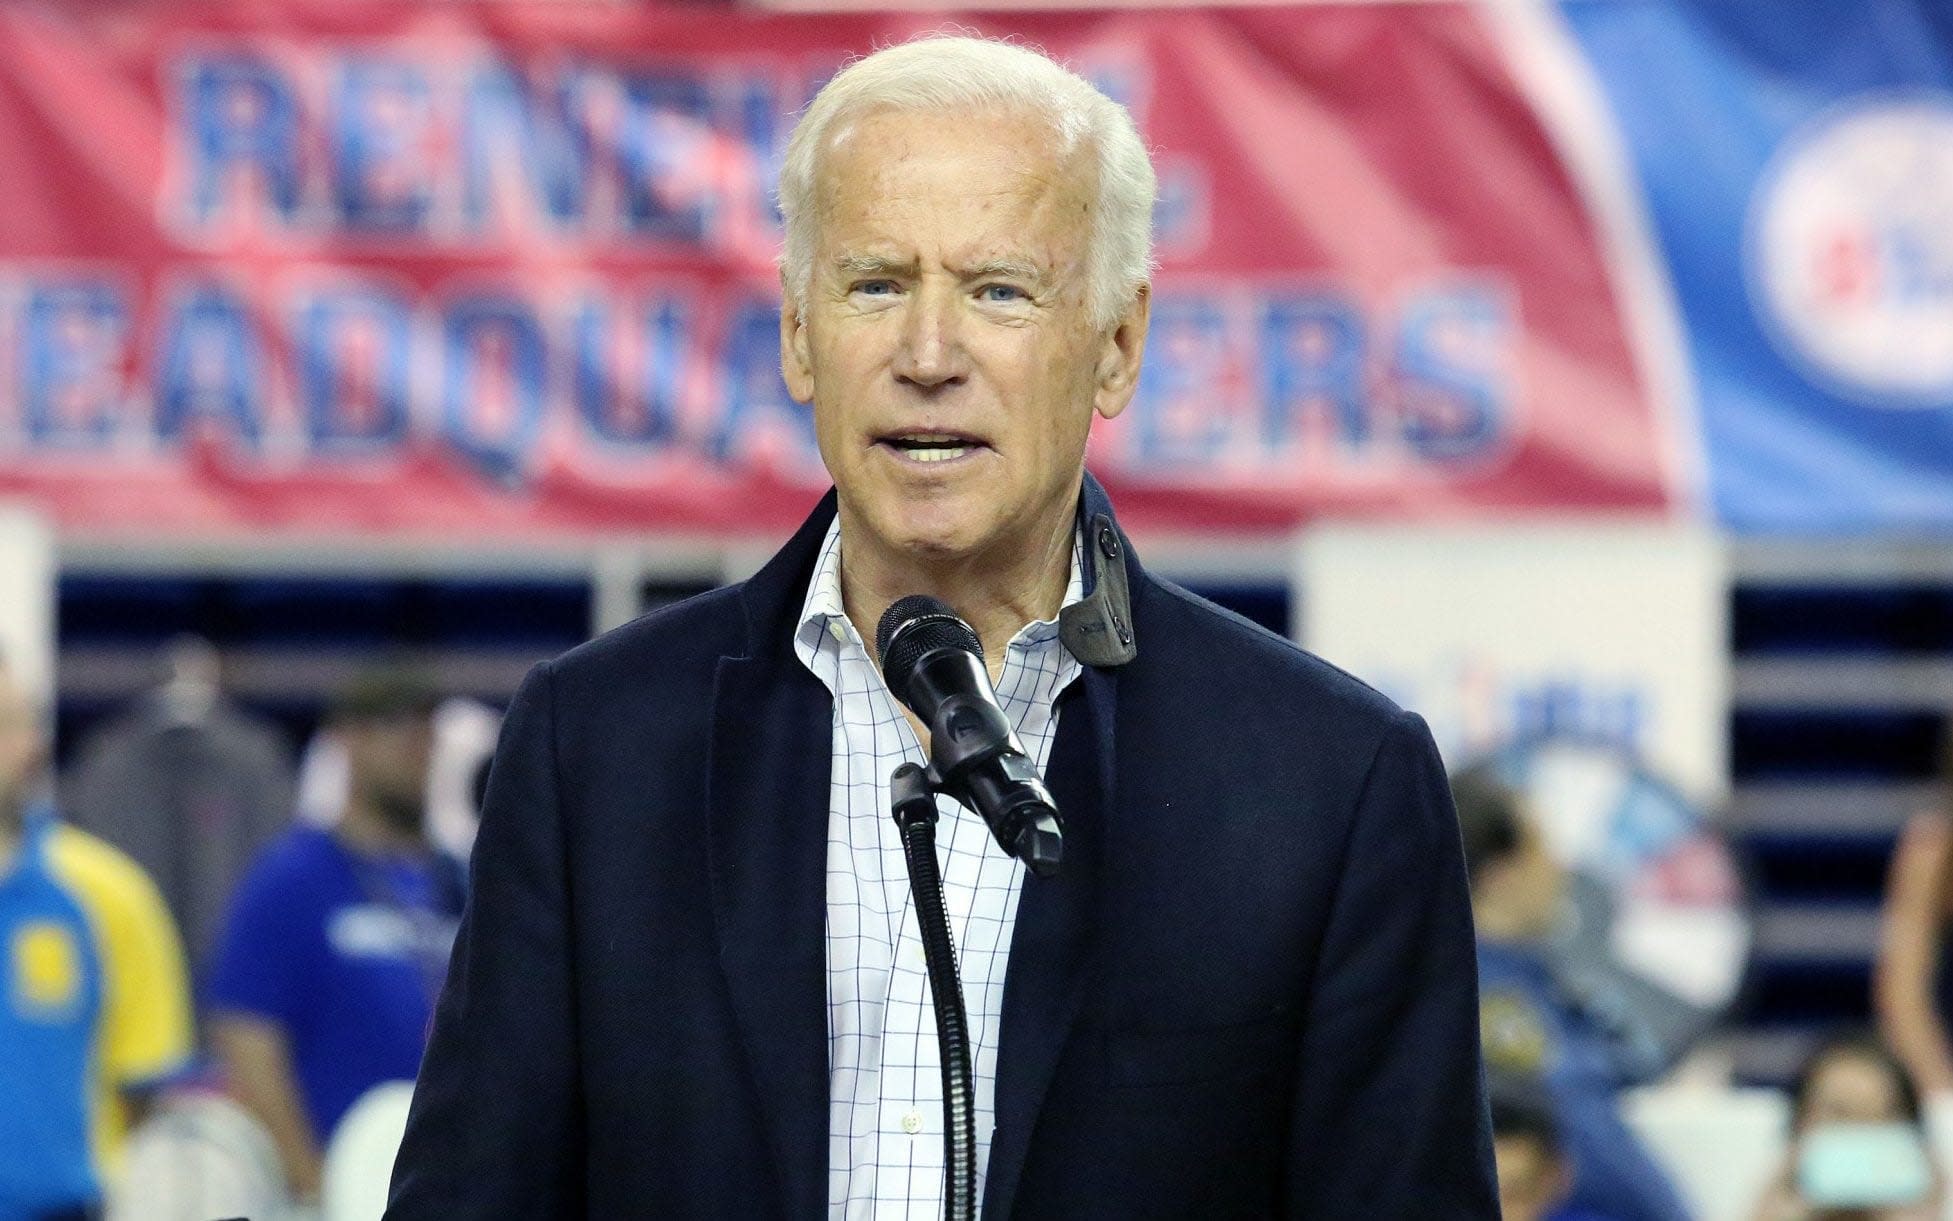 Joe Biden says he could have beaten Donald Trump